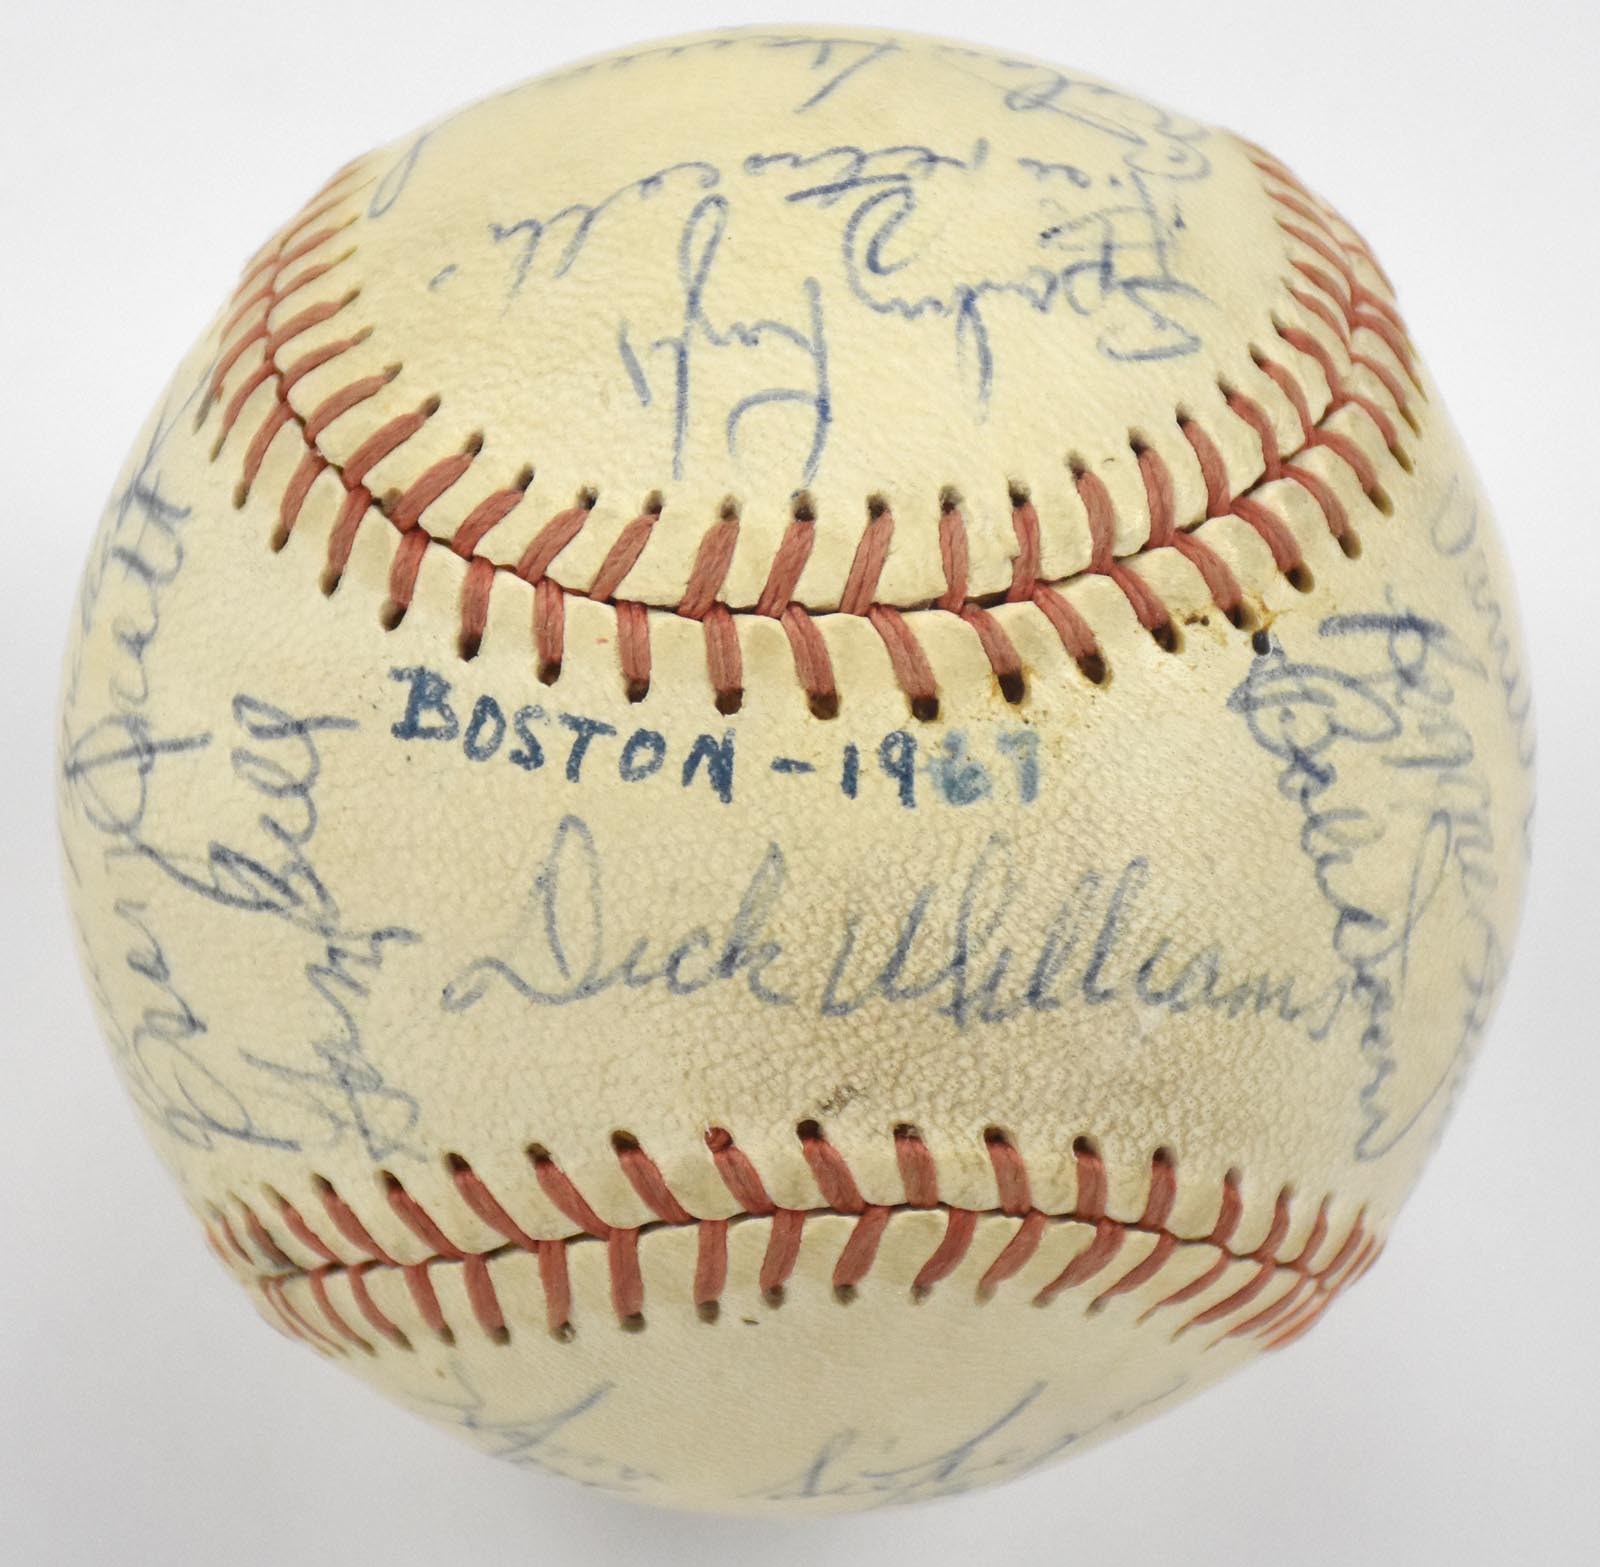 Baseball Autographs - 1967 A.L. Champion Boston Red Sox Signed Baseball